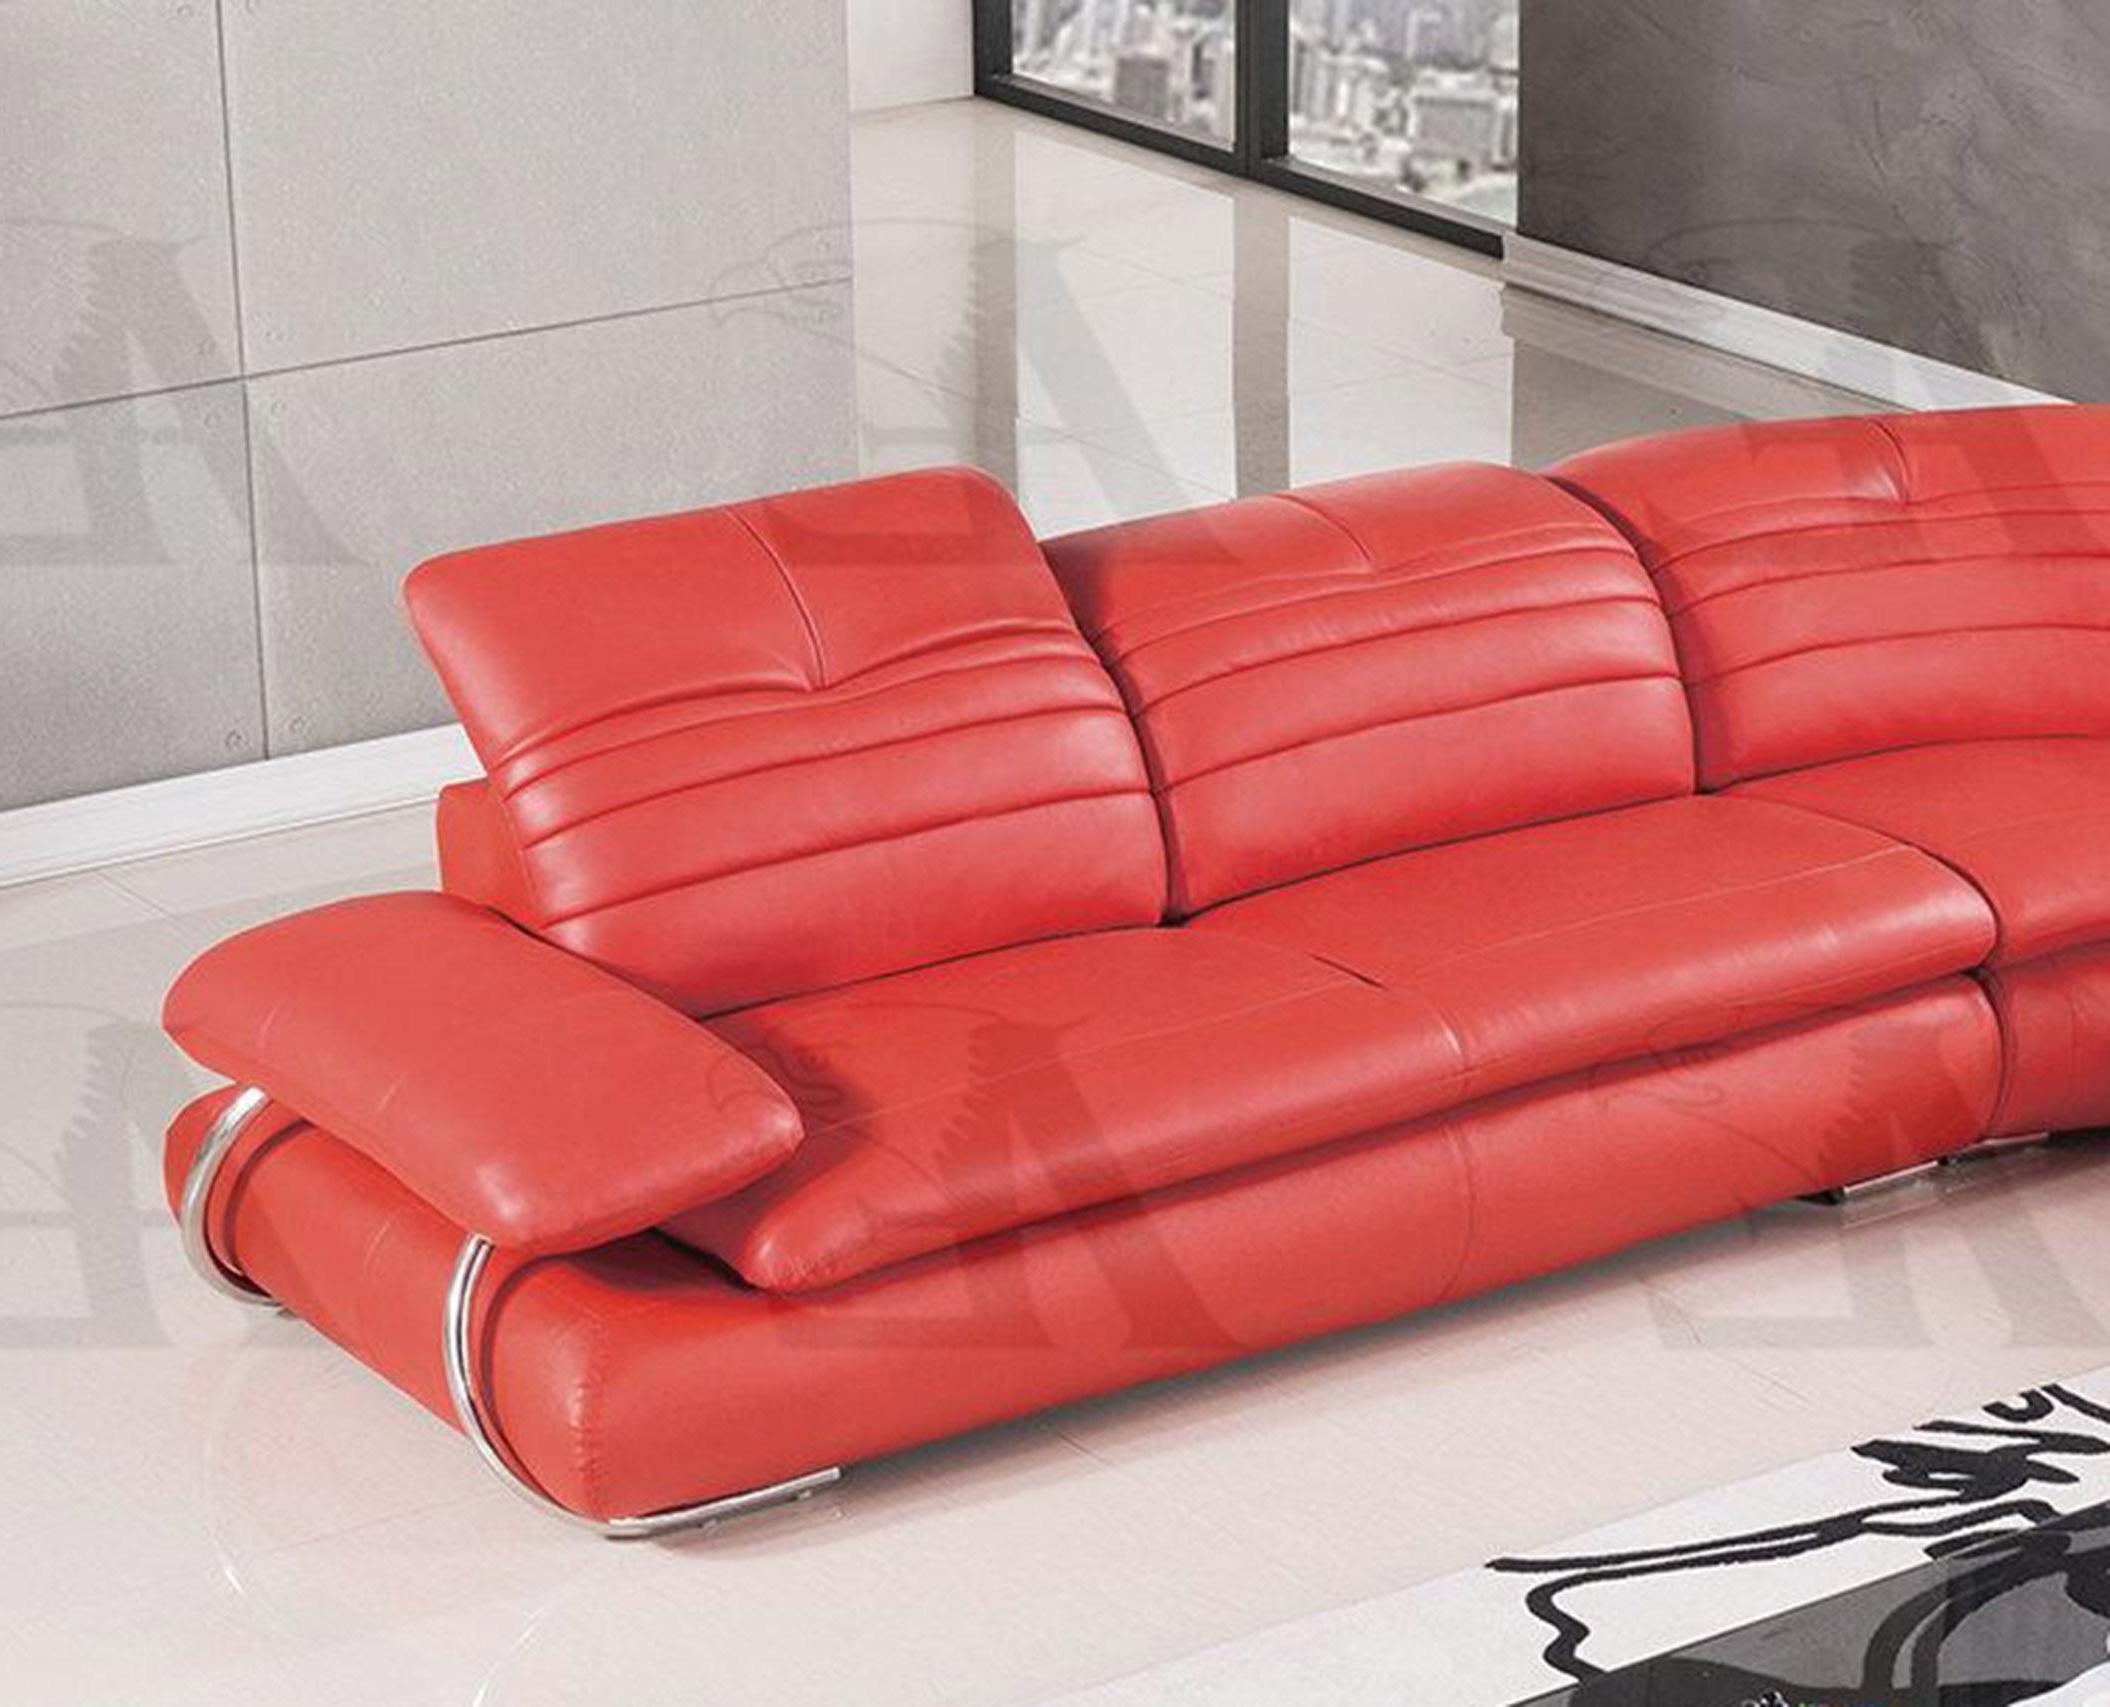 

    
American Eagle EK-LB119-RED Sofa RHC Chaise Table 2 Ottomans Set Genuine Leather
